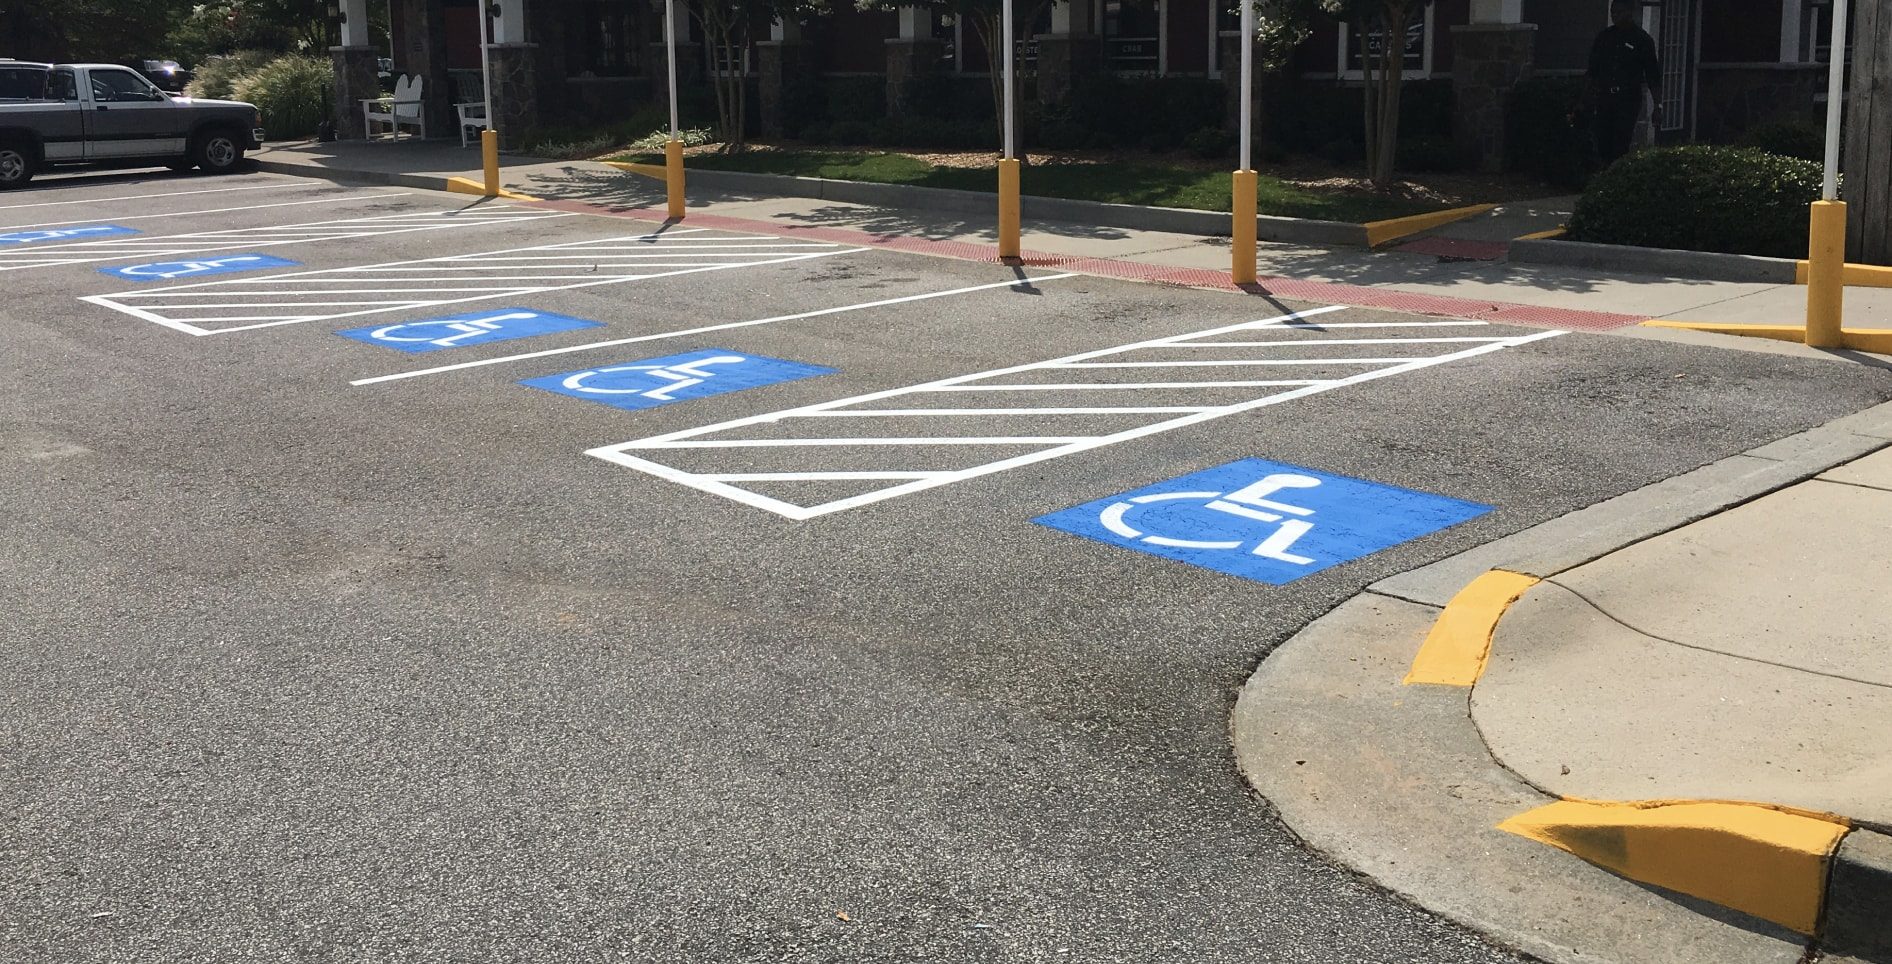 parking lot with handicap spaces